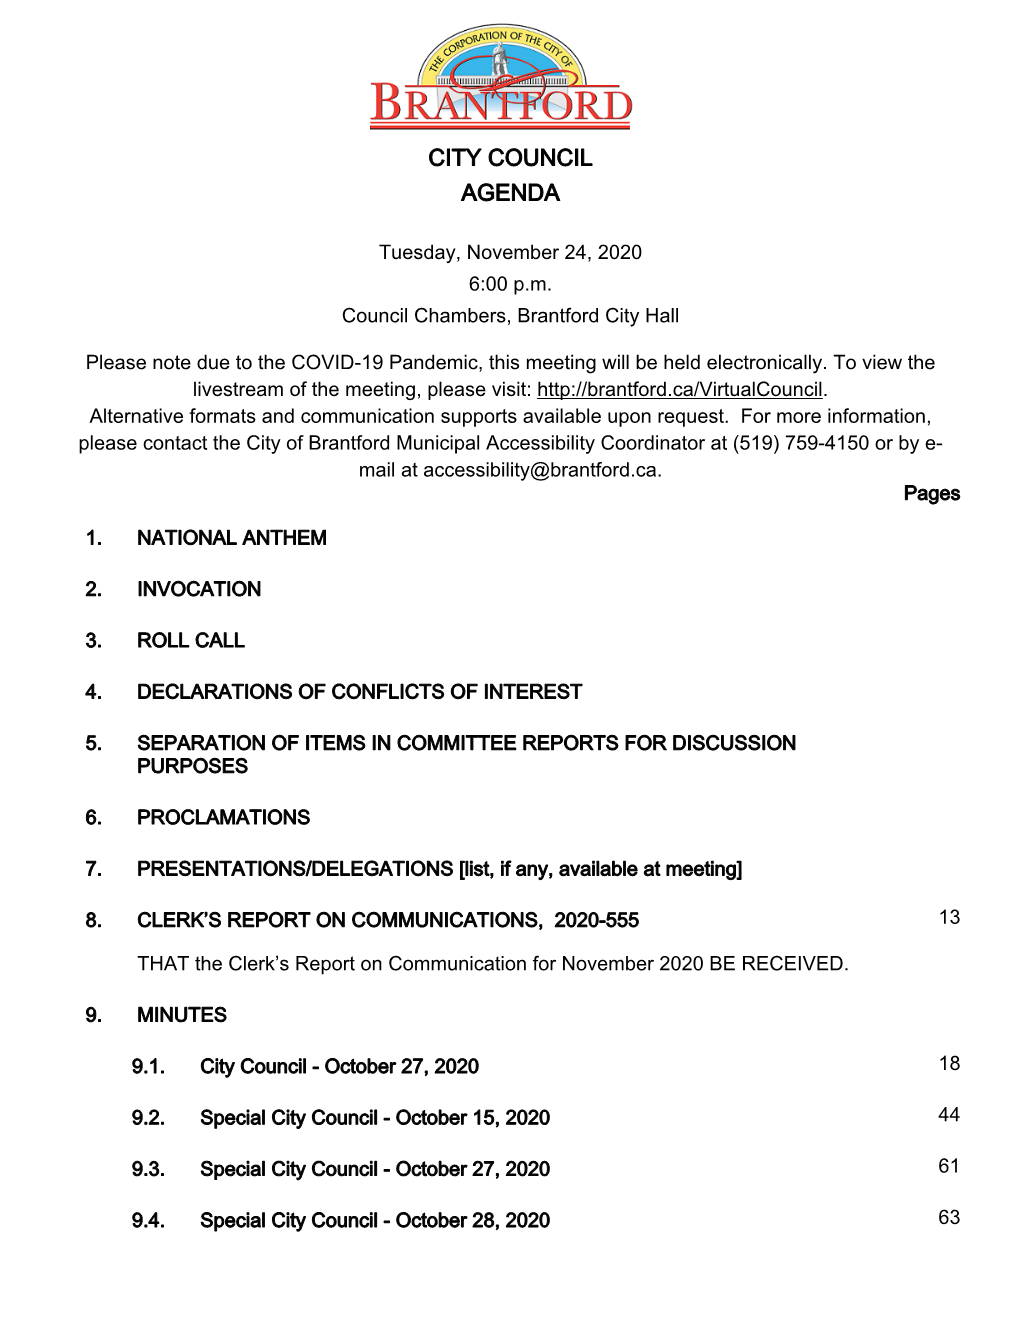 Brantford City Council Agenda Package